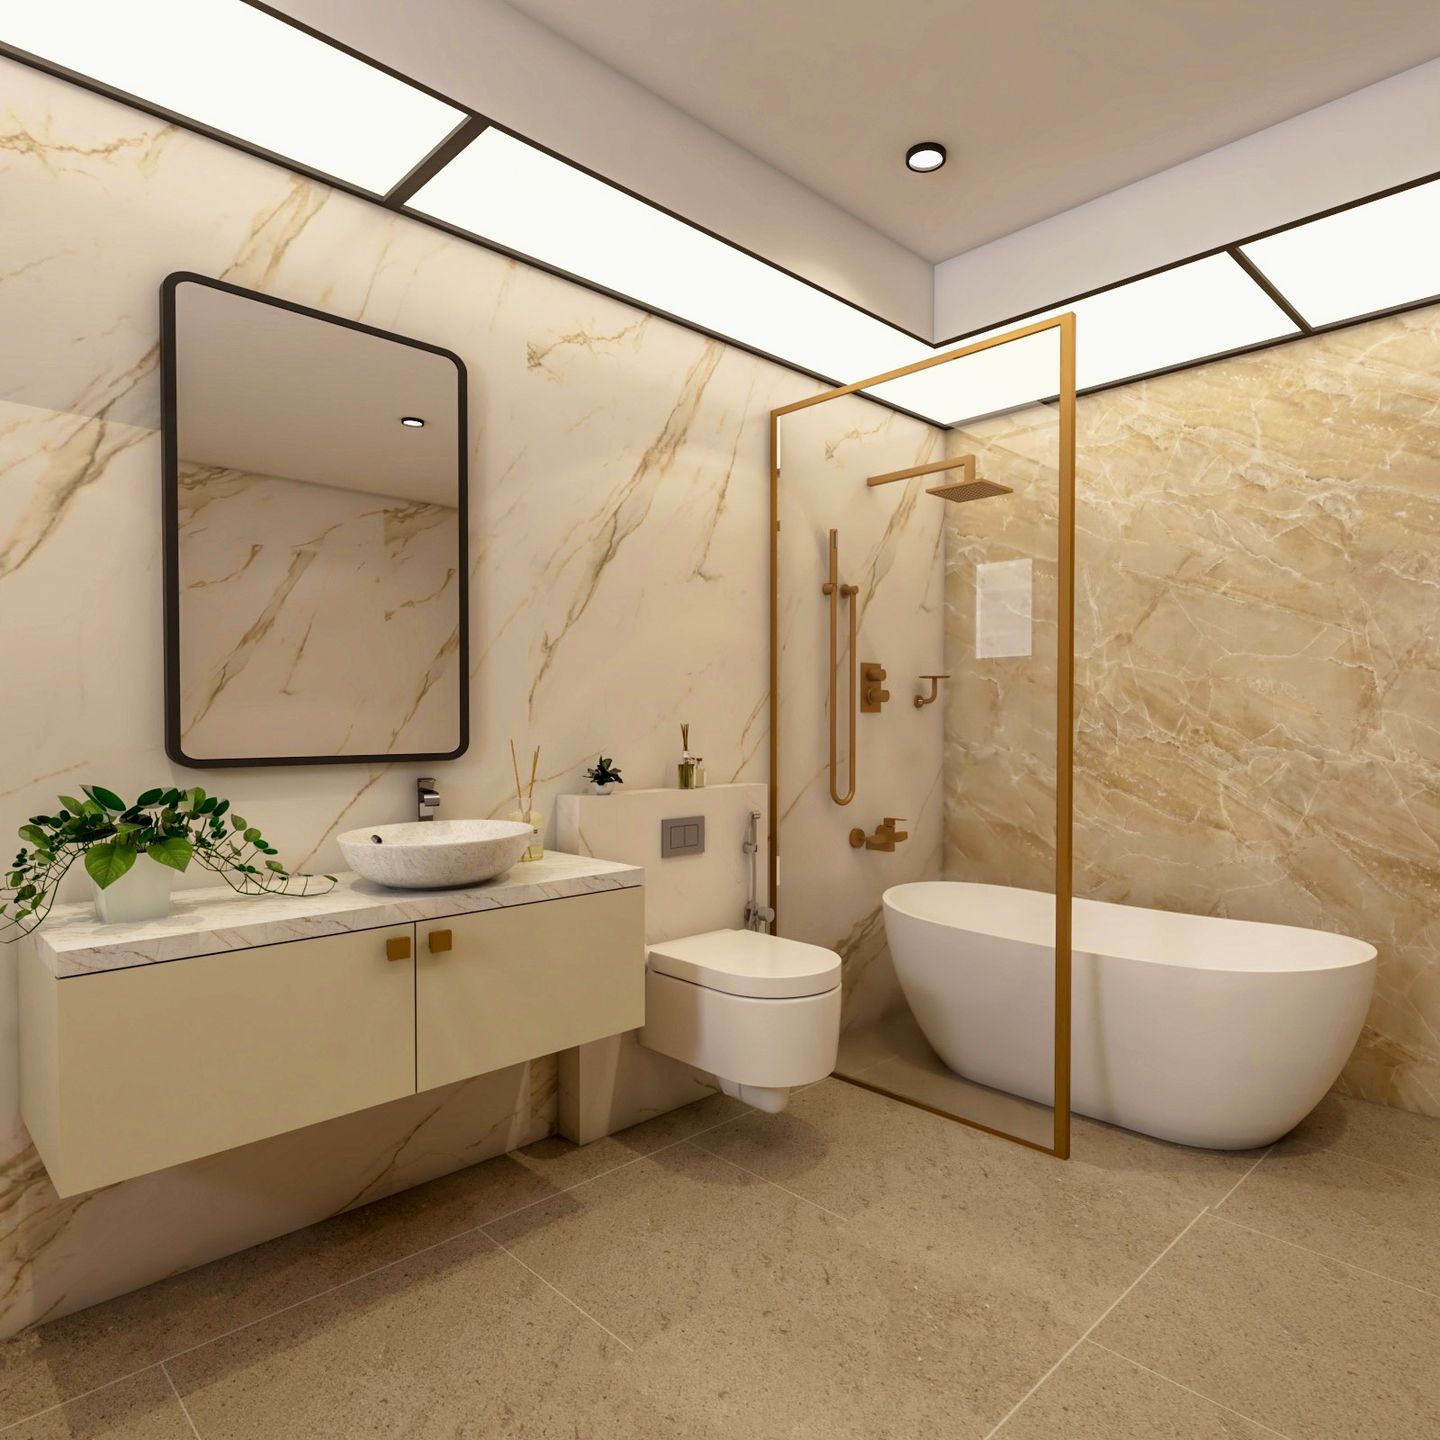 Marble Bathroom Design With Bathtub And White Vanity Unit - Livspace